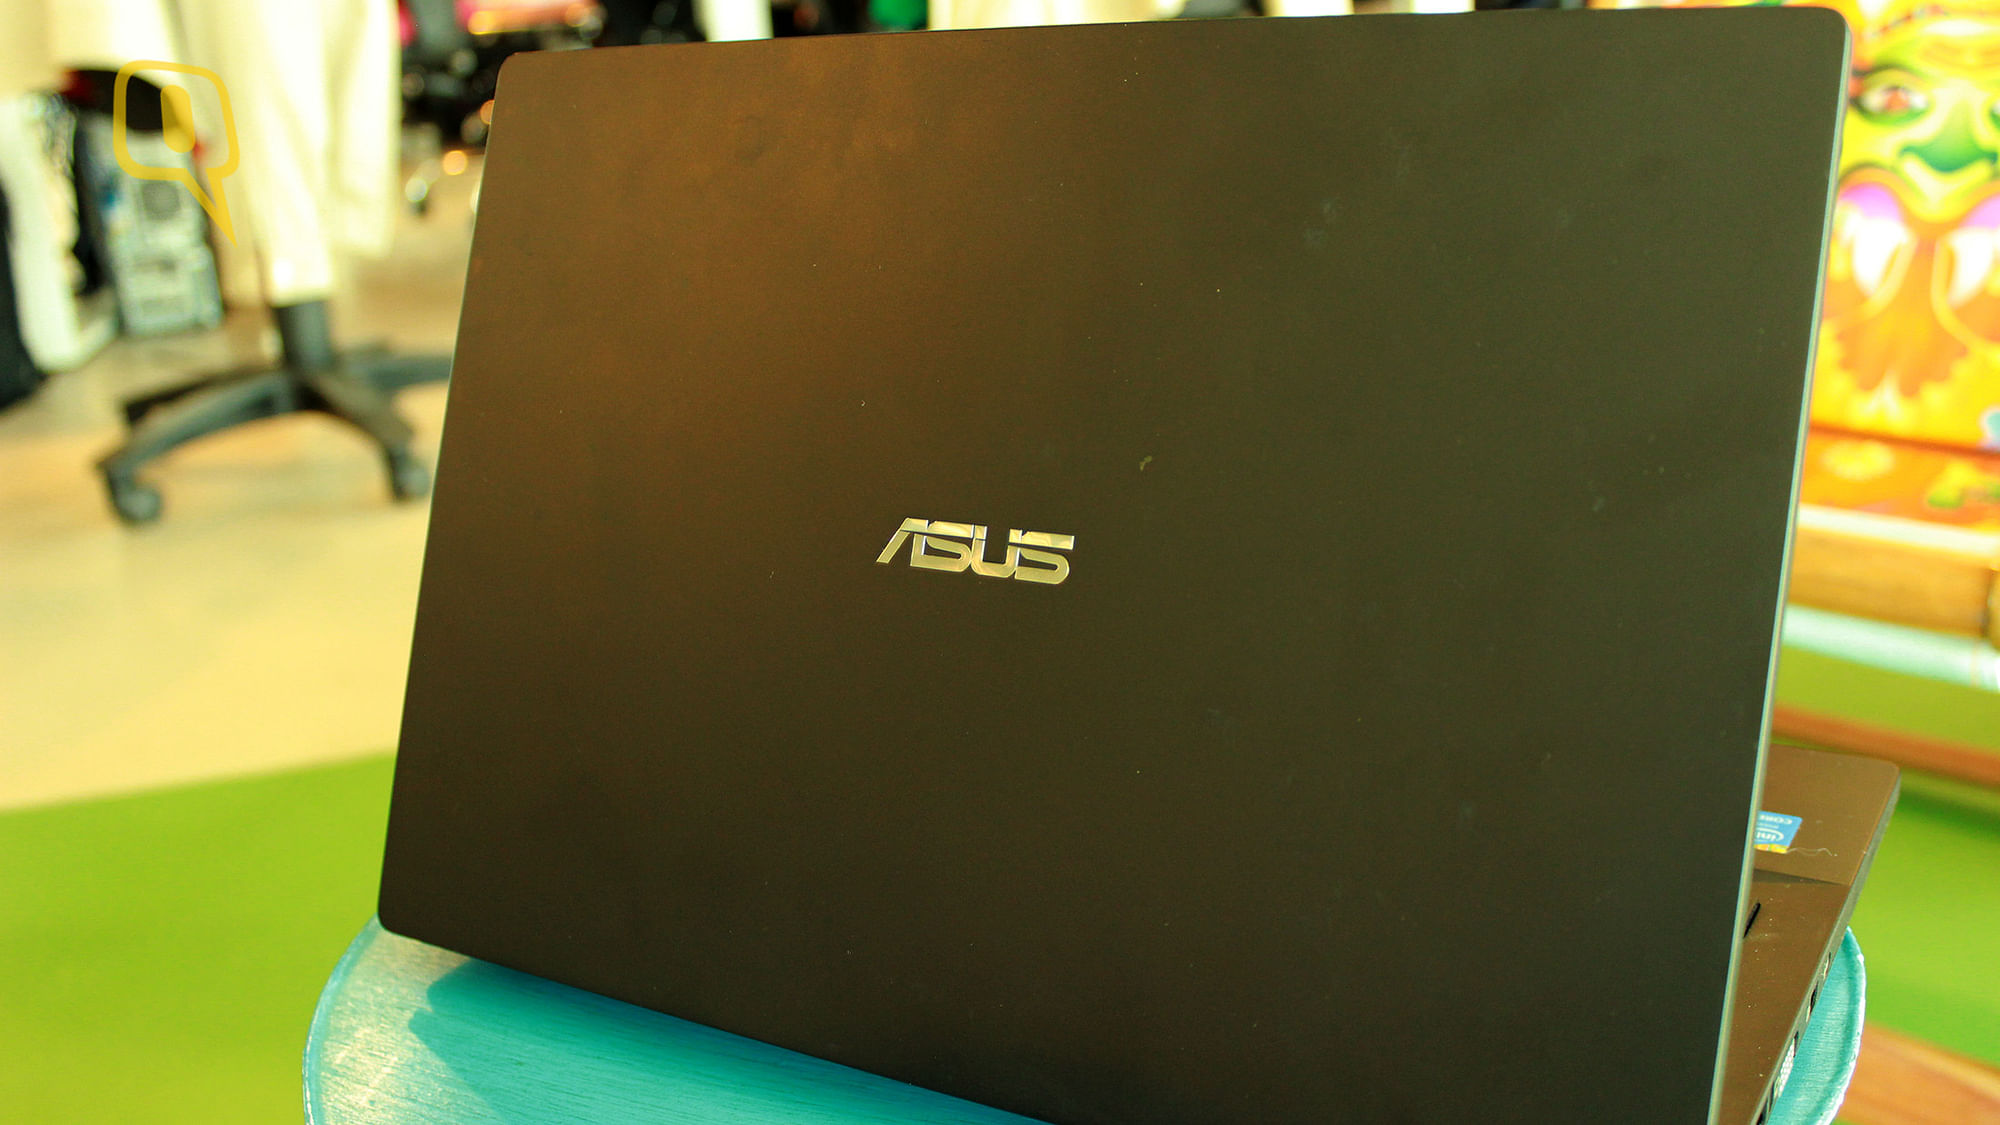 Asus BU201 business laptop. (Photo: <b>The Quint</b>)